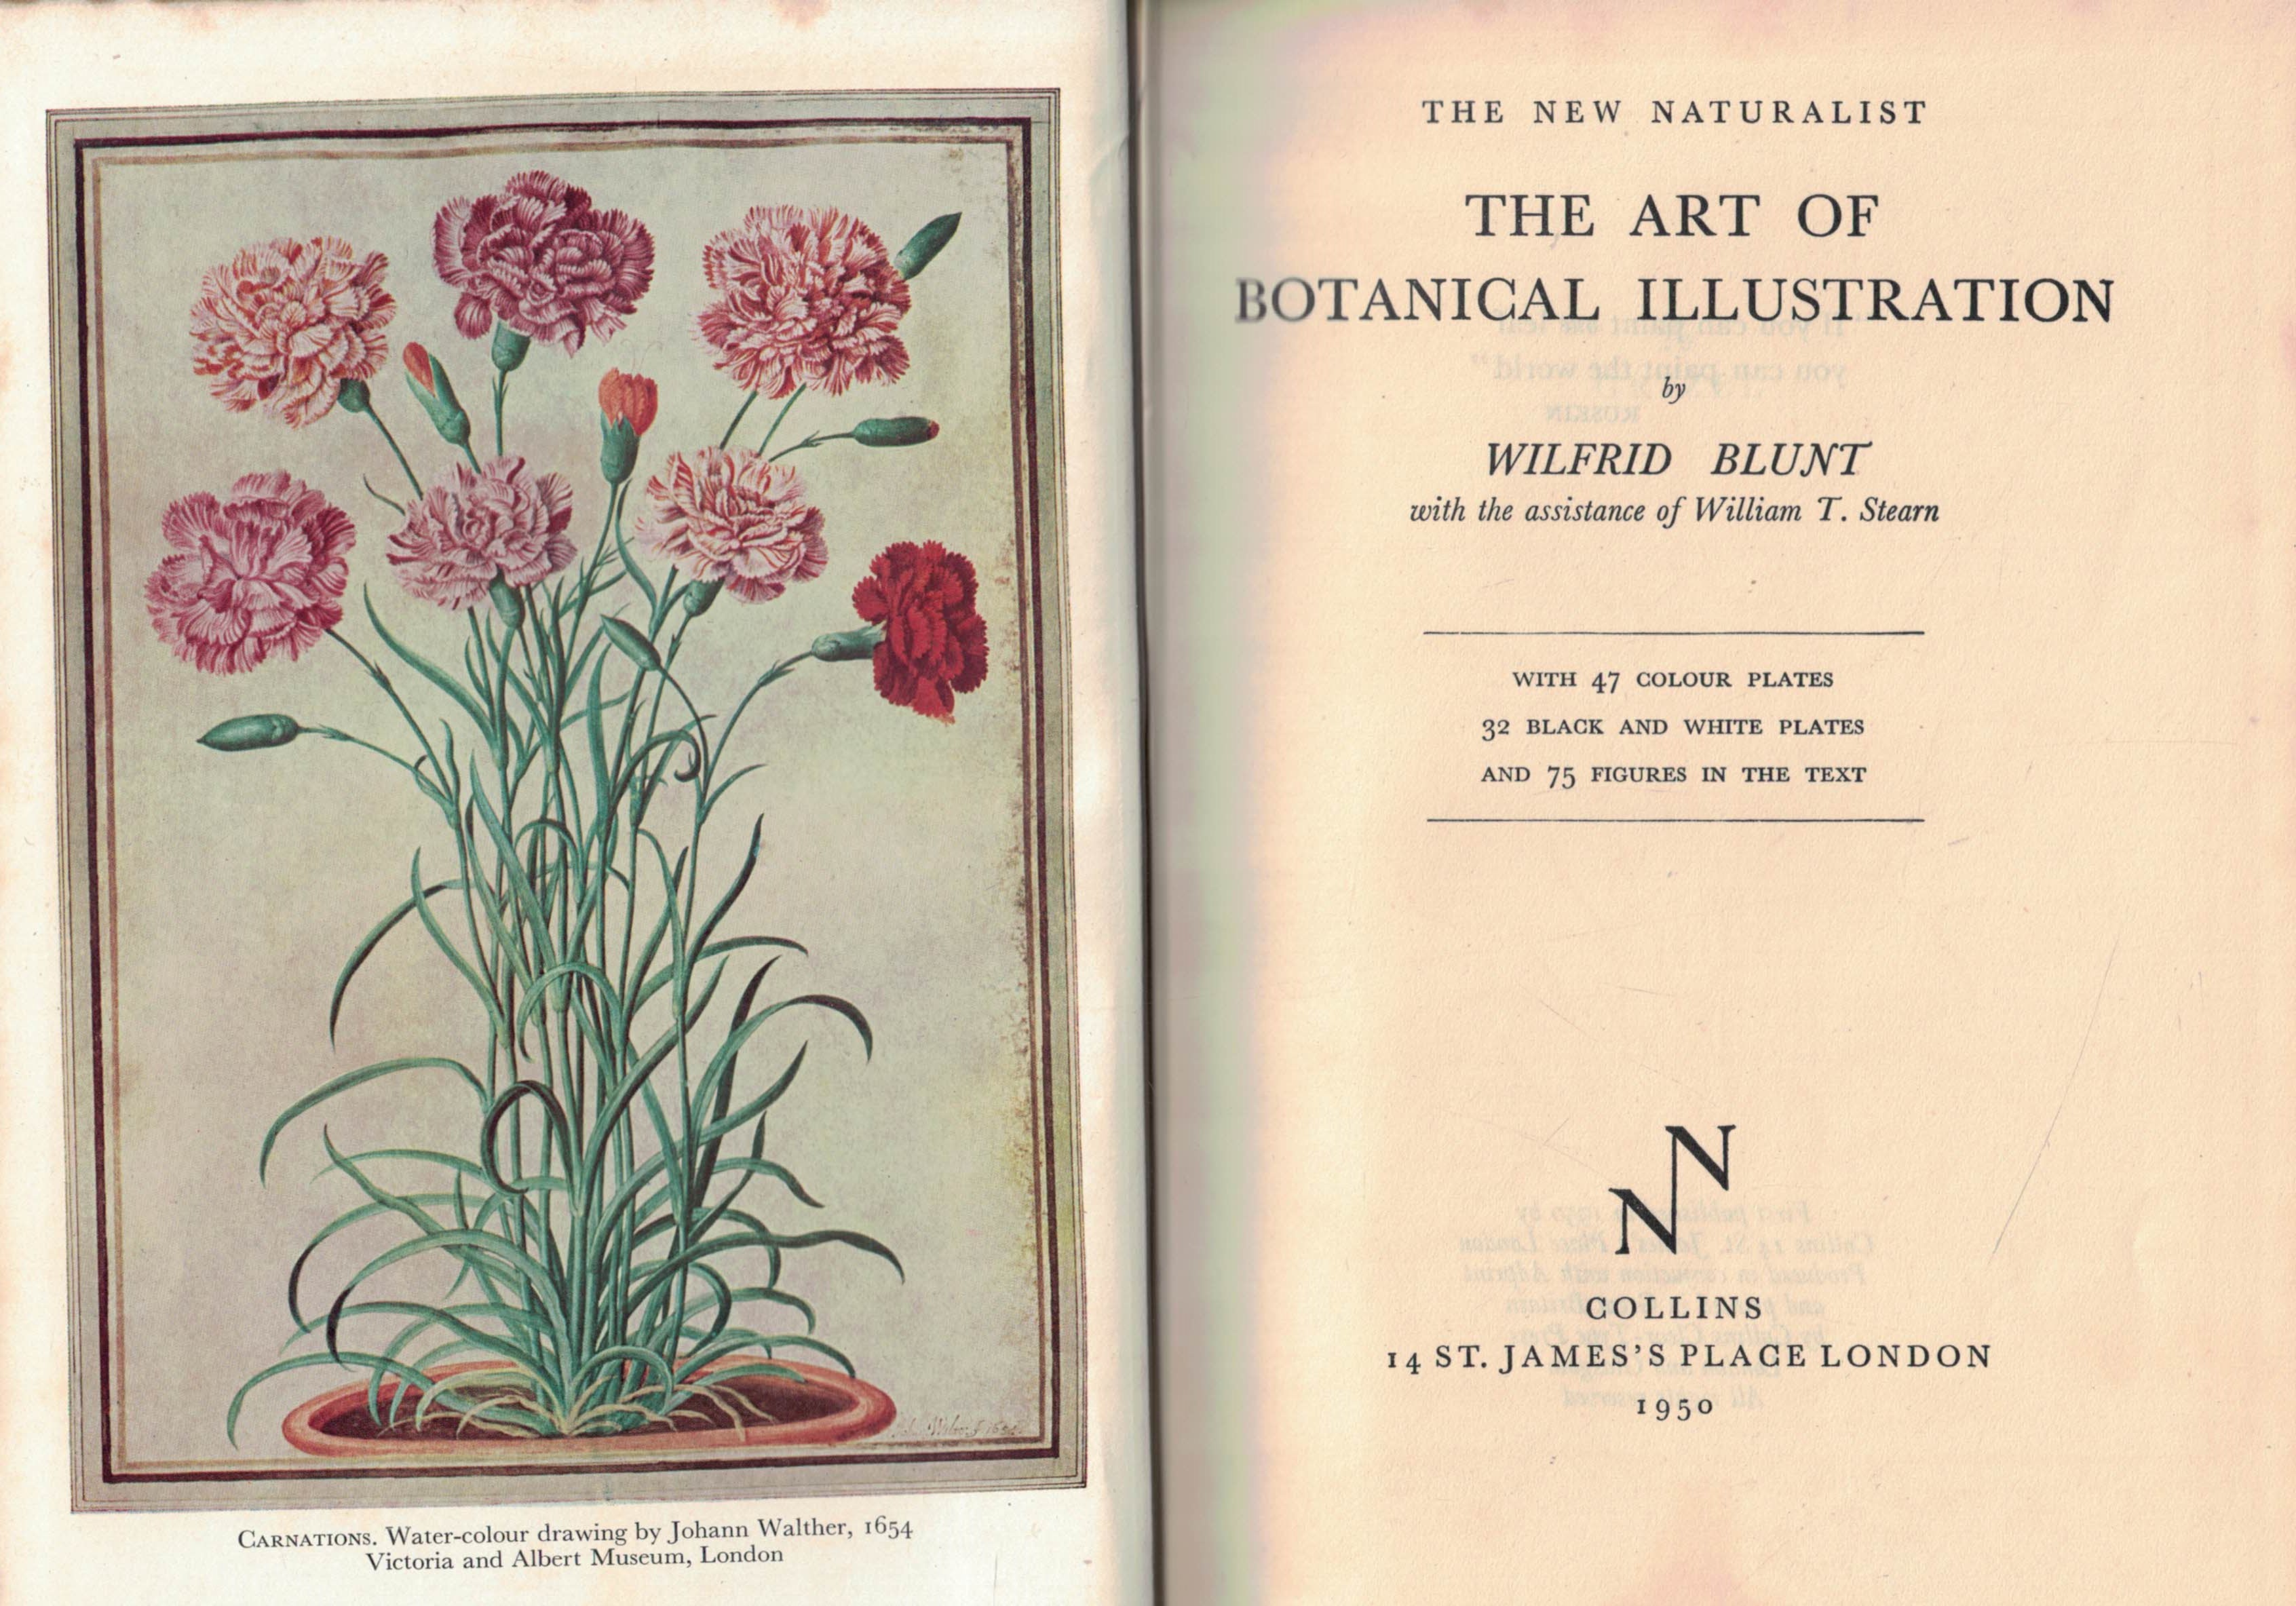 The Art of Botanical Illustration. New Naturalist No. 14. 1950.